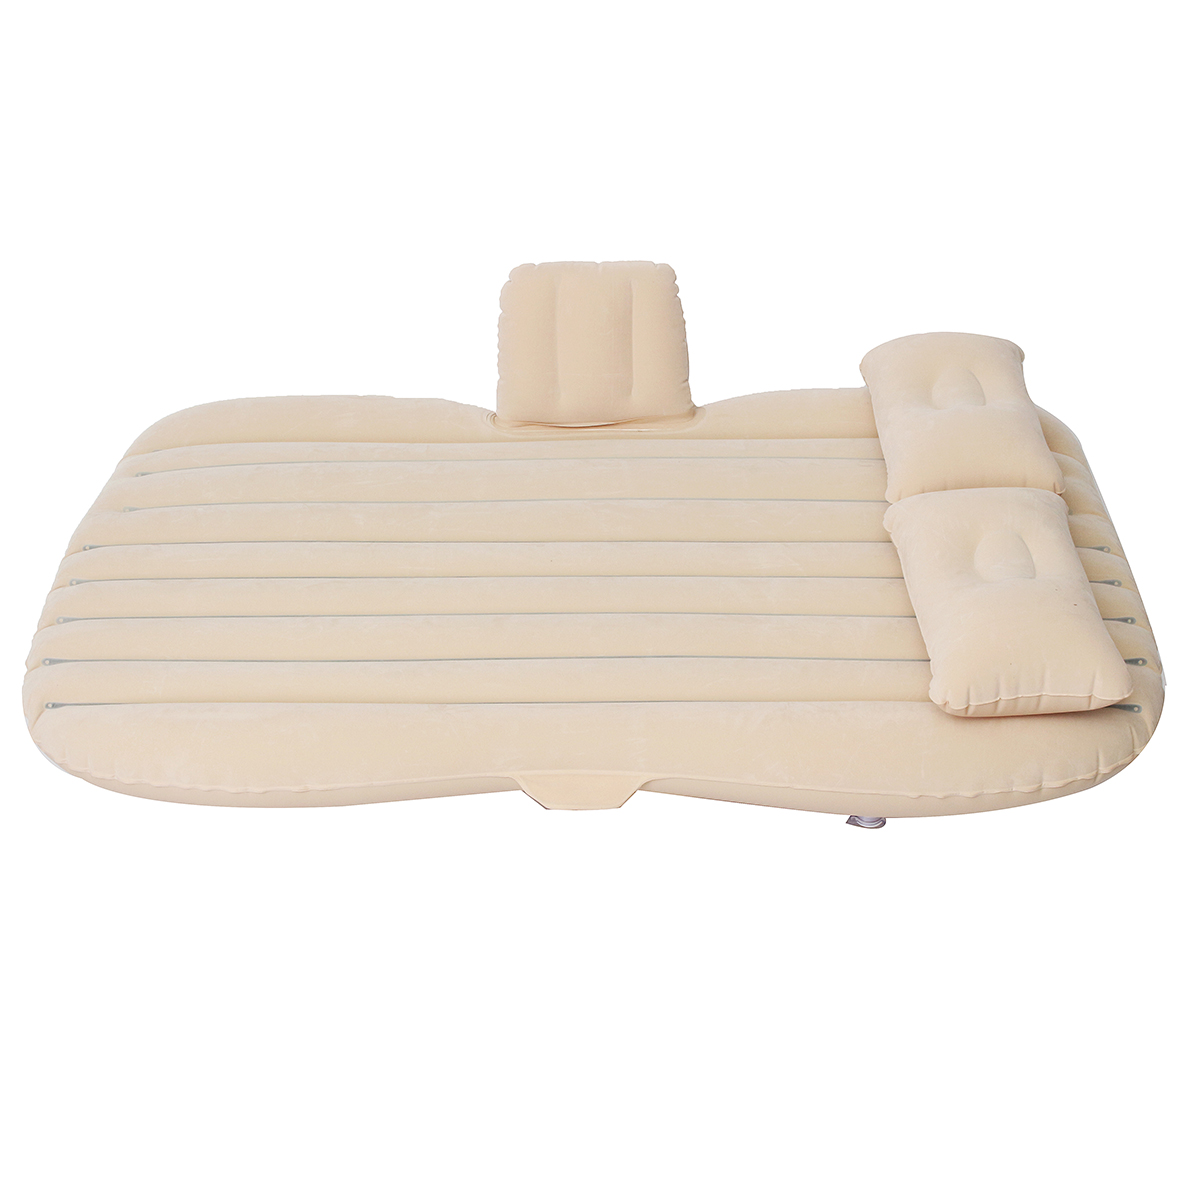 Inflatable-Car-SUV-MPV-Back-Seat-Mattress-Air-Folding-Bed-Rest-Sleeping-Camping-Pillows-1411733